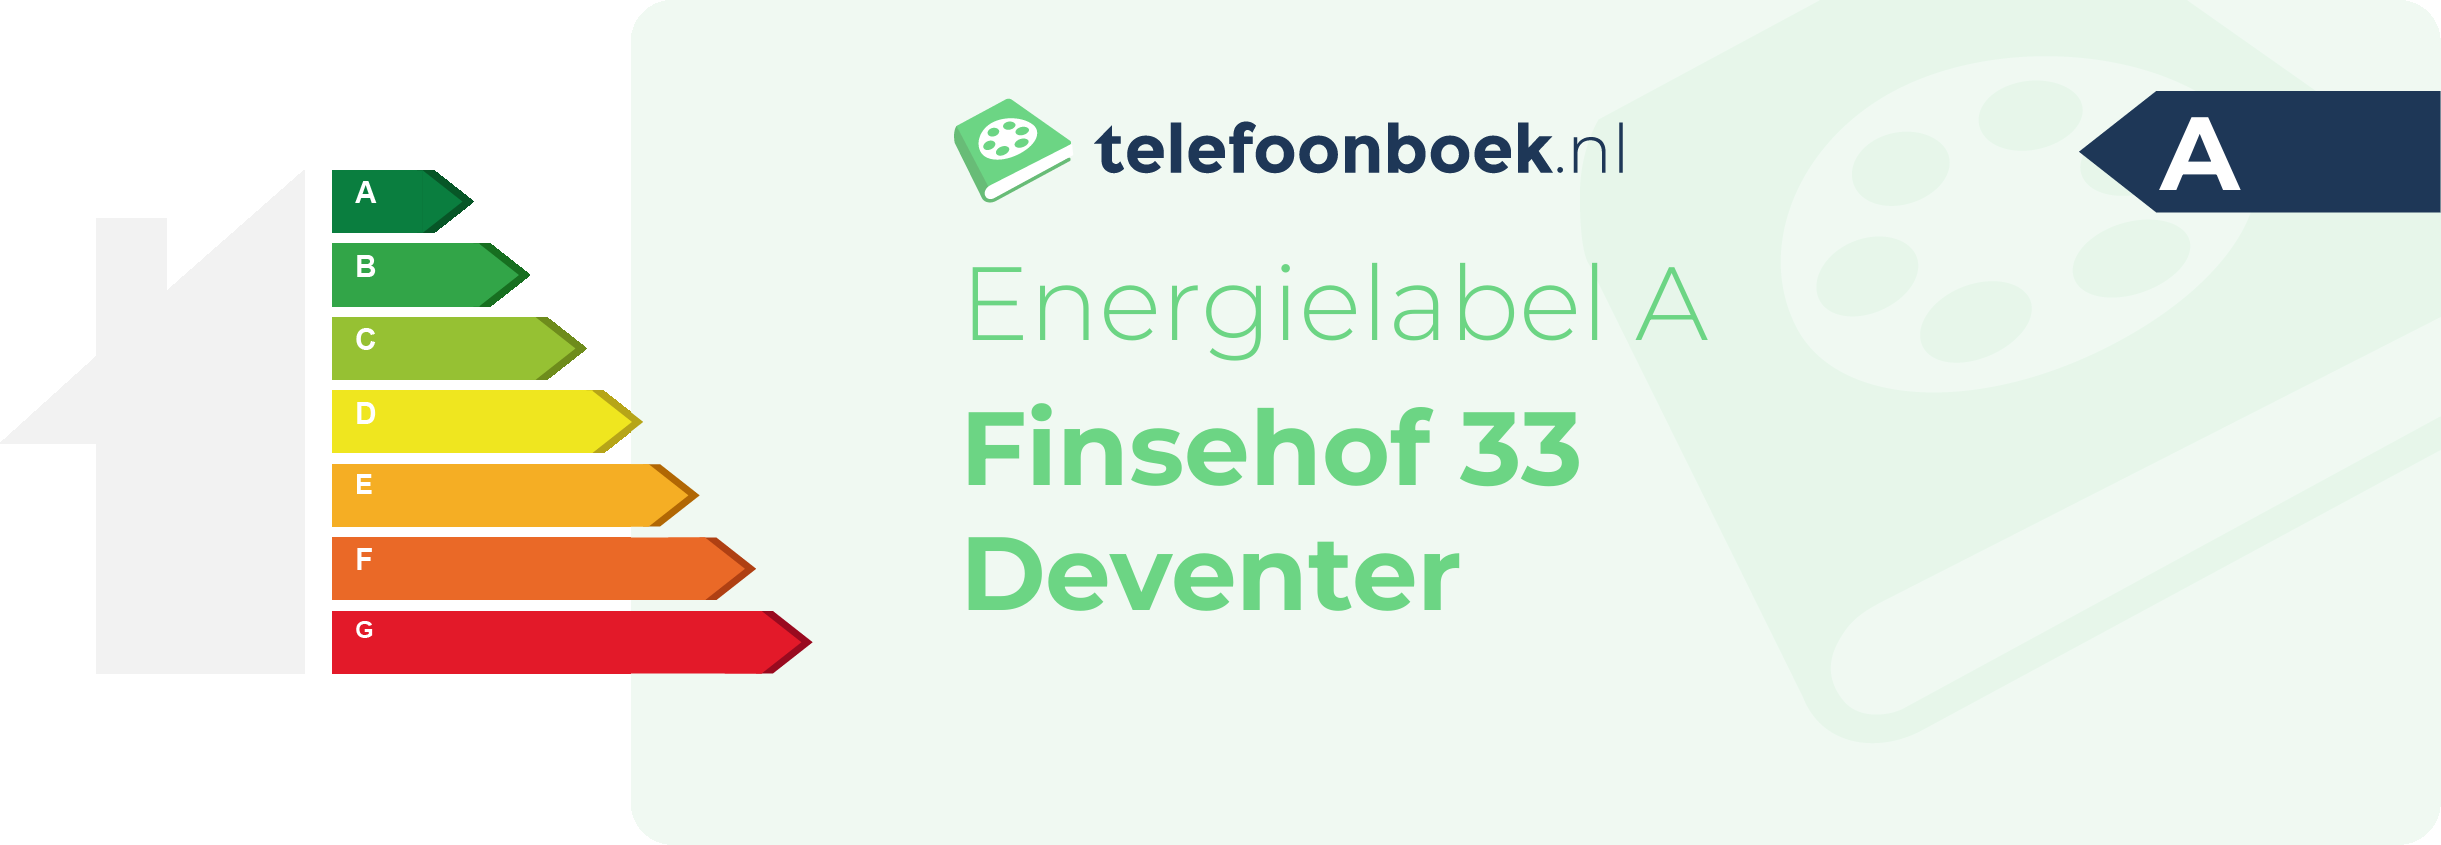 Energielabel Finsehof 33 Deventer